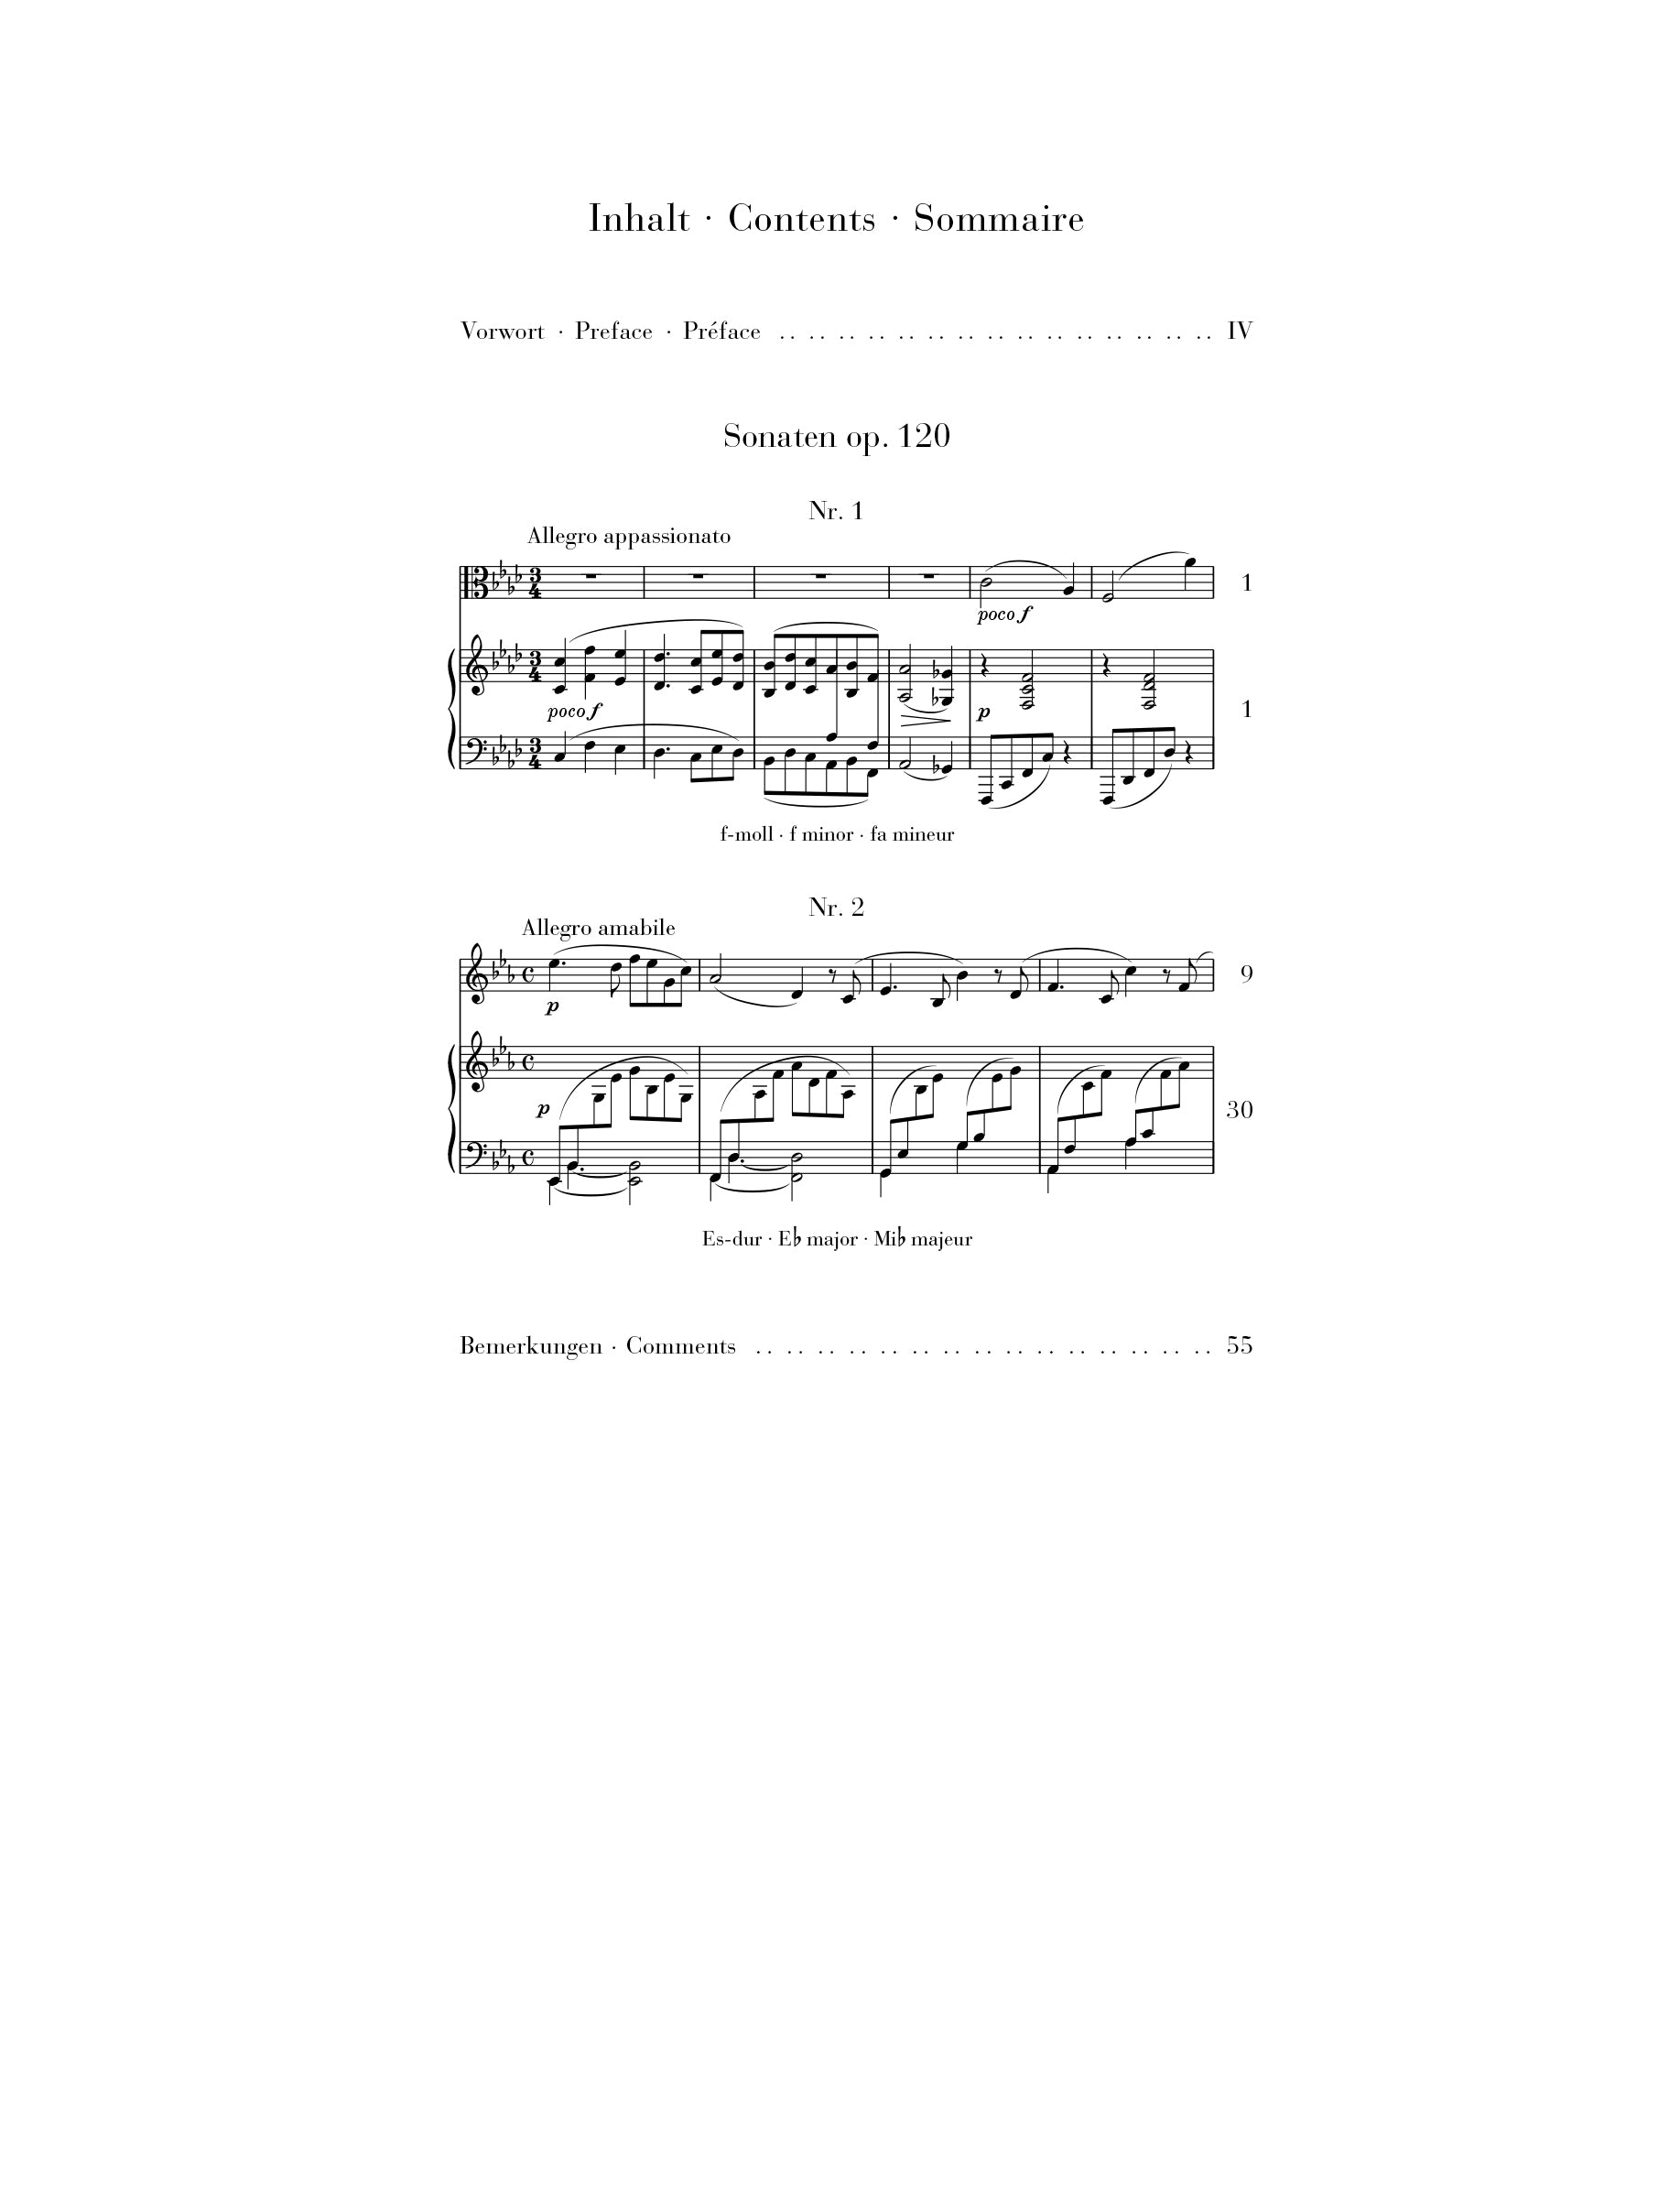 Brahms: Clarinet Sonata Op. 120, Edition for Viola & Piano